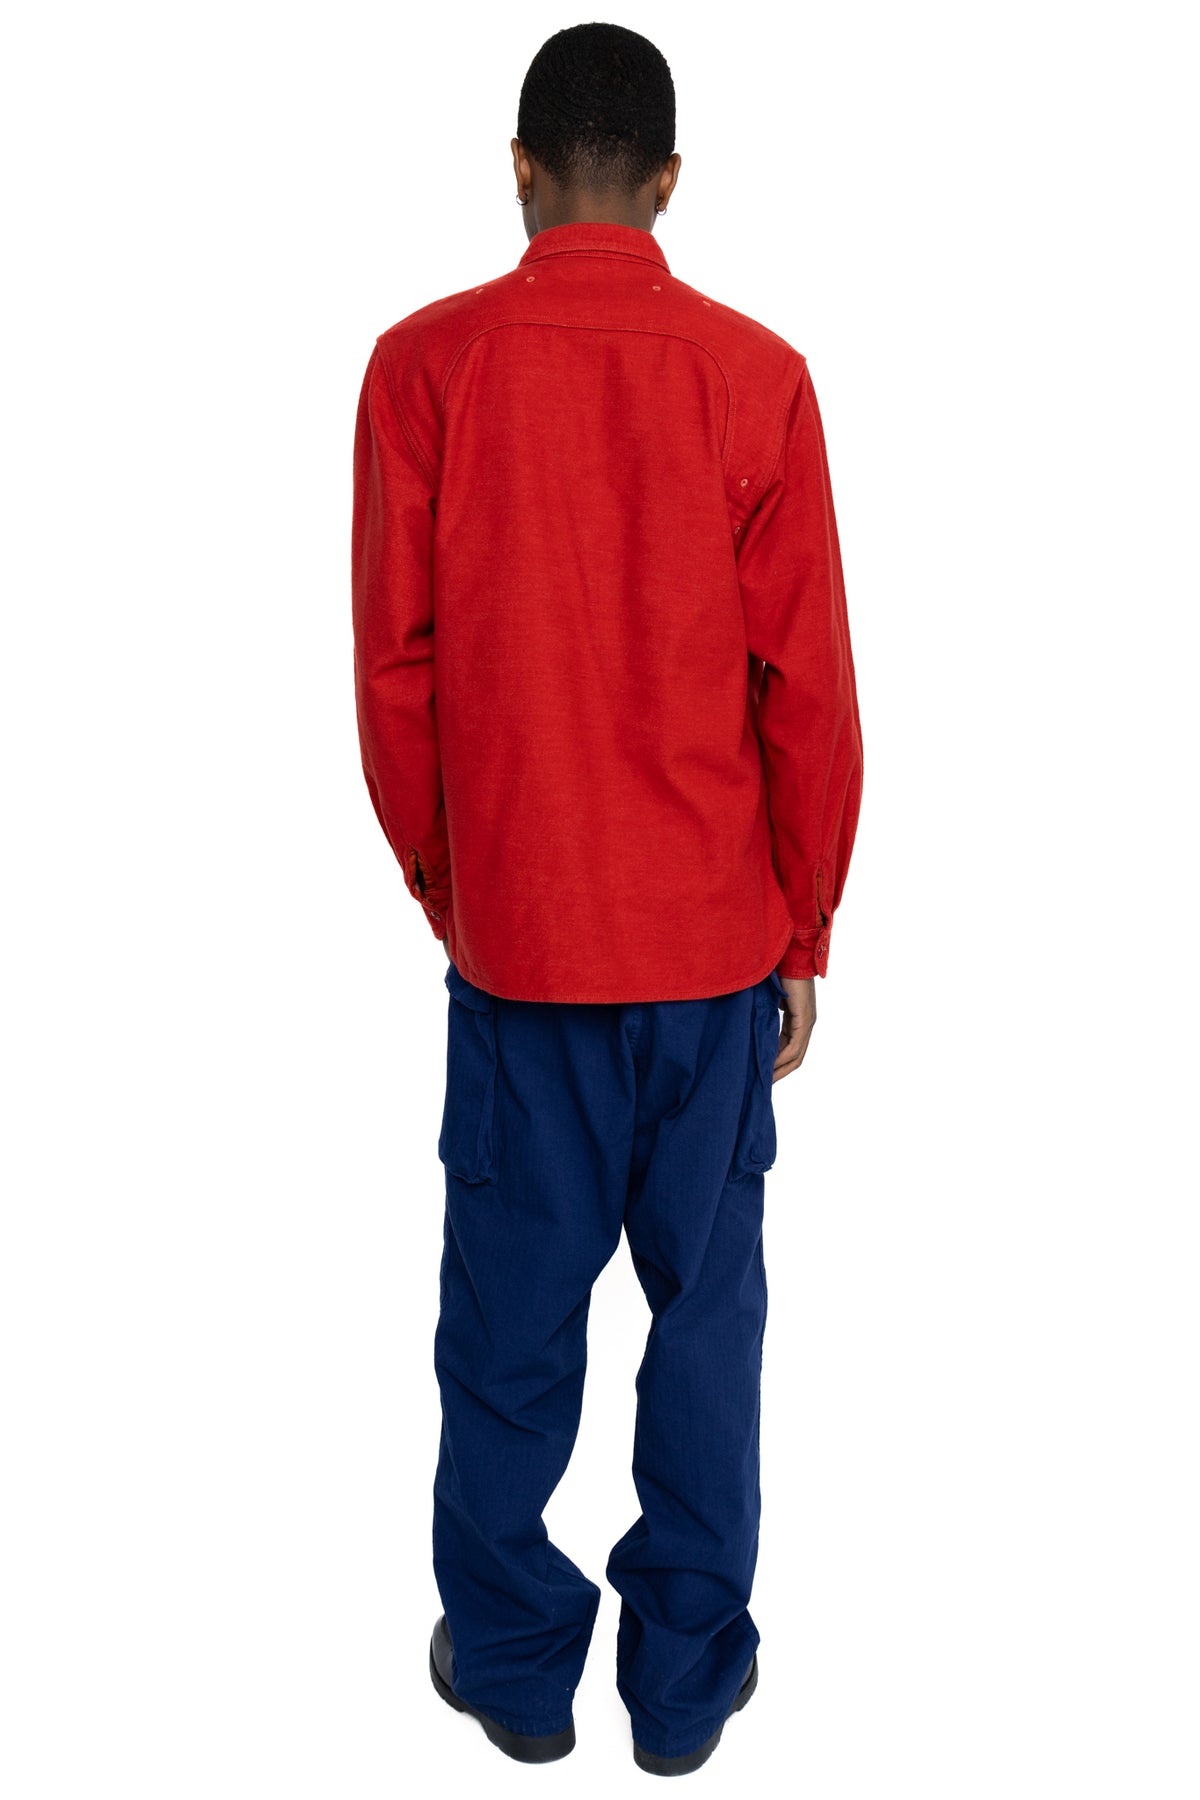 CPO Cotton Wool MOPAR Shirt - Red - 6